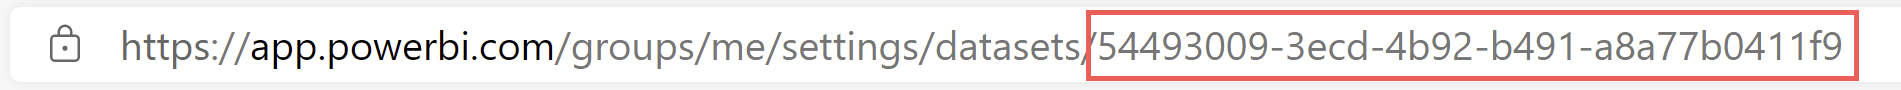 Screenshot of an example dataset ID.